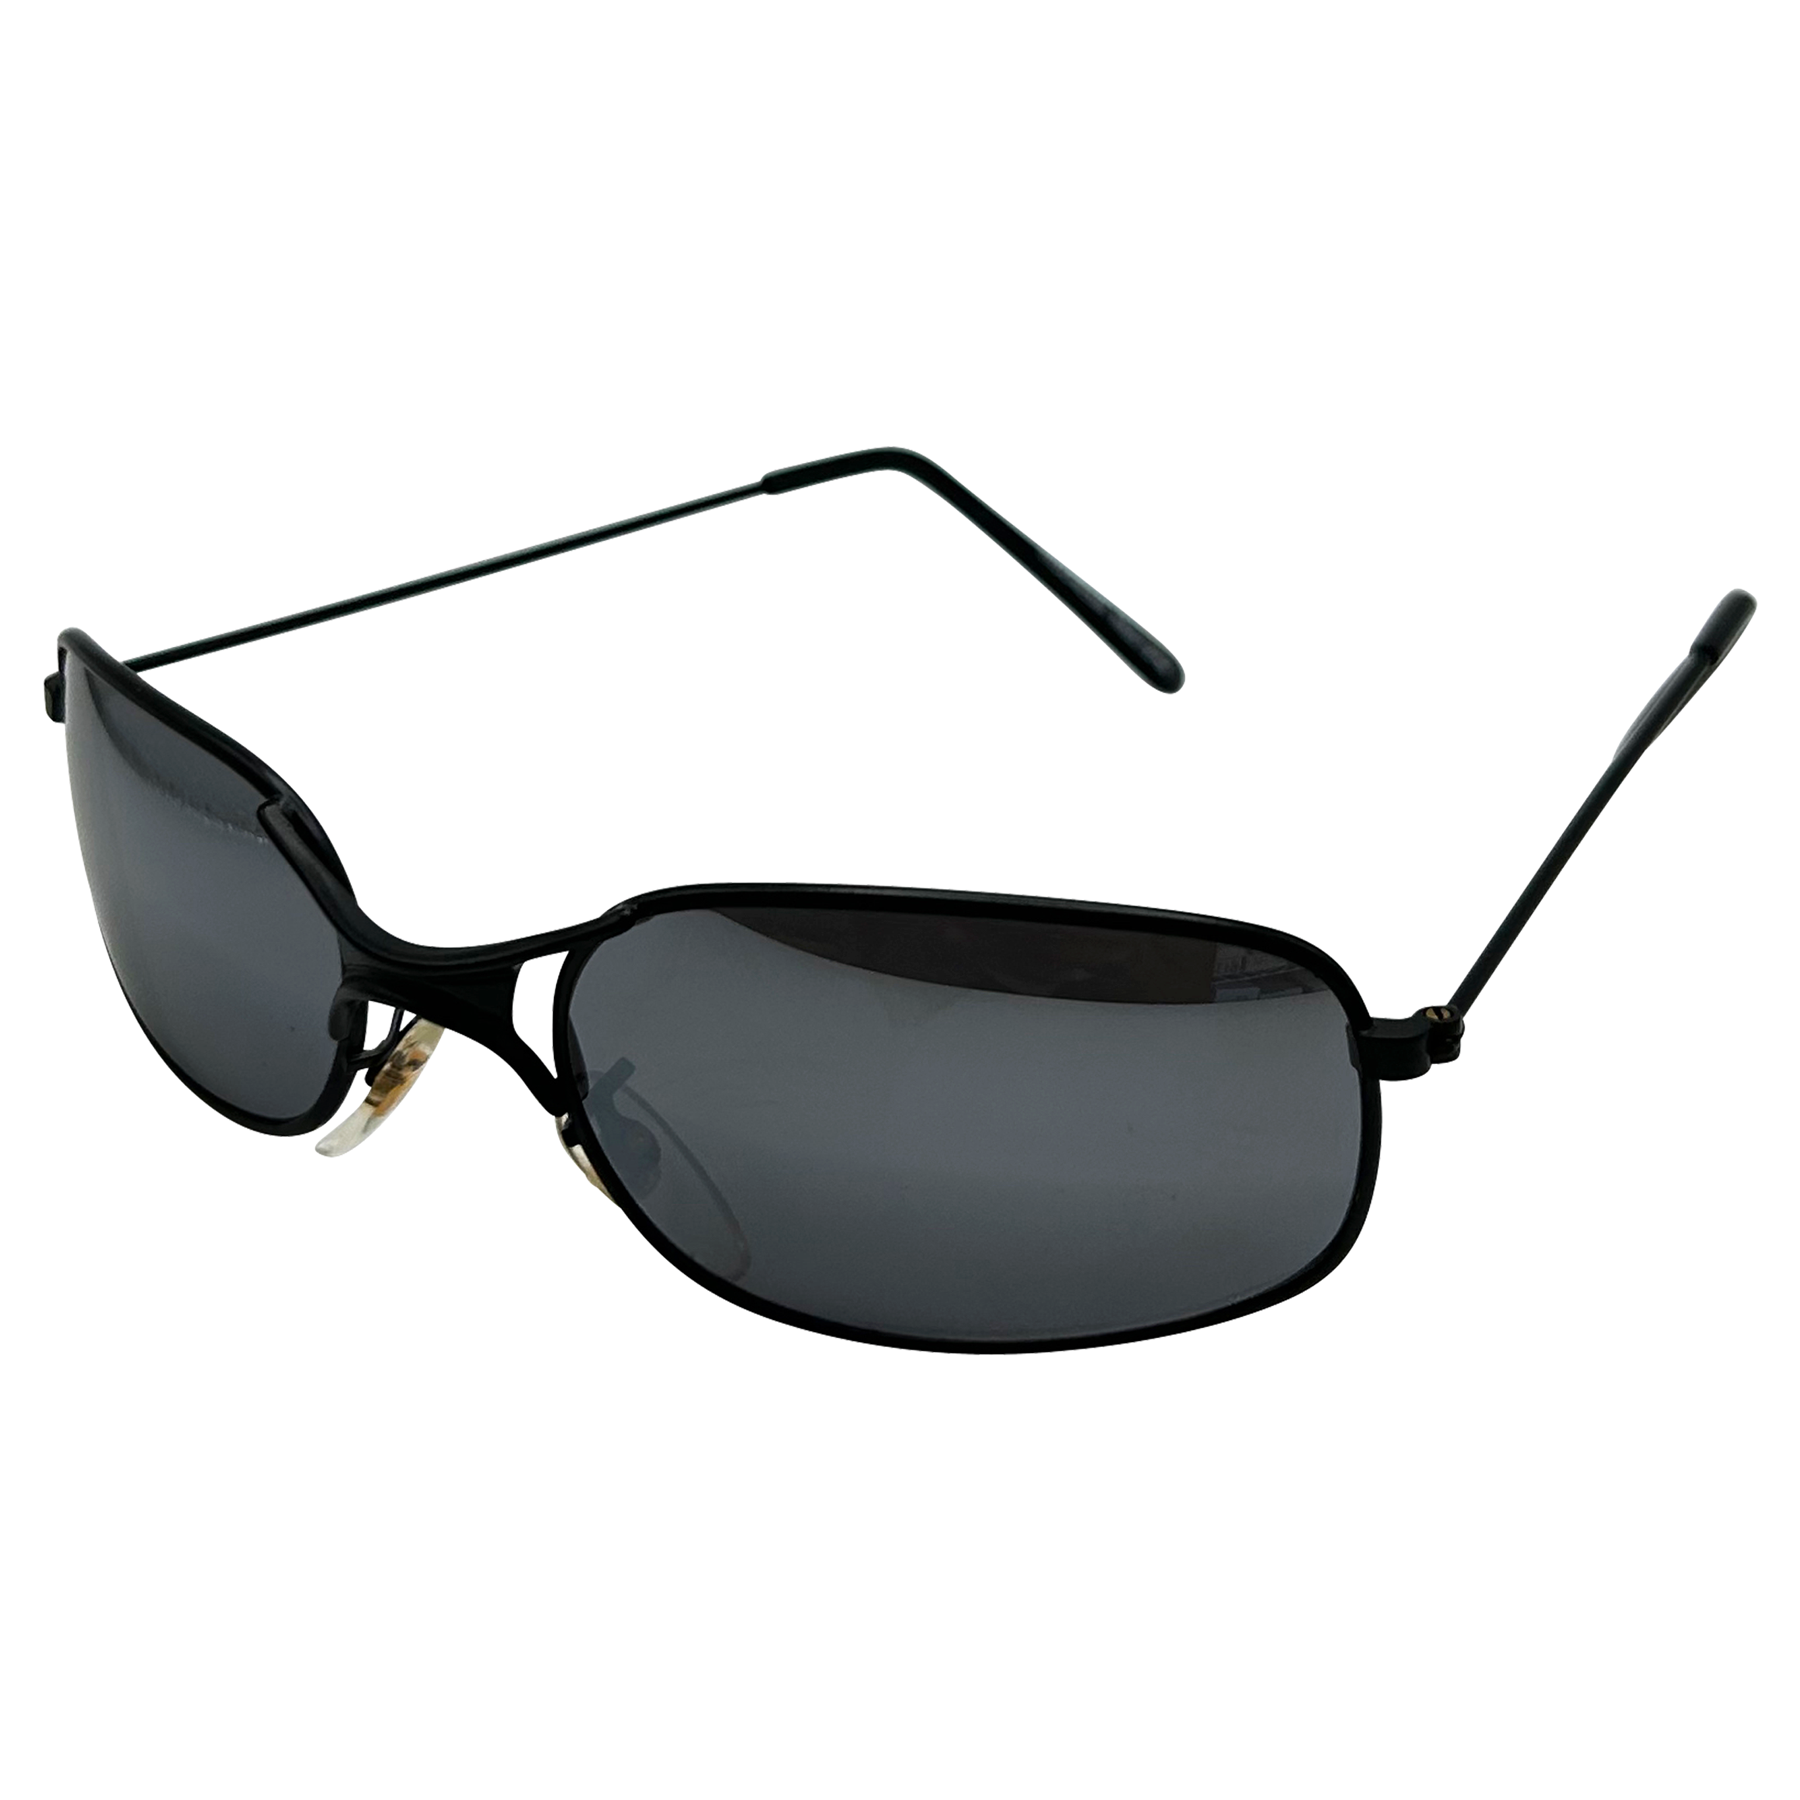 SUPERNOVA Square 90s Sunglasses